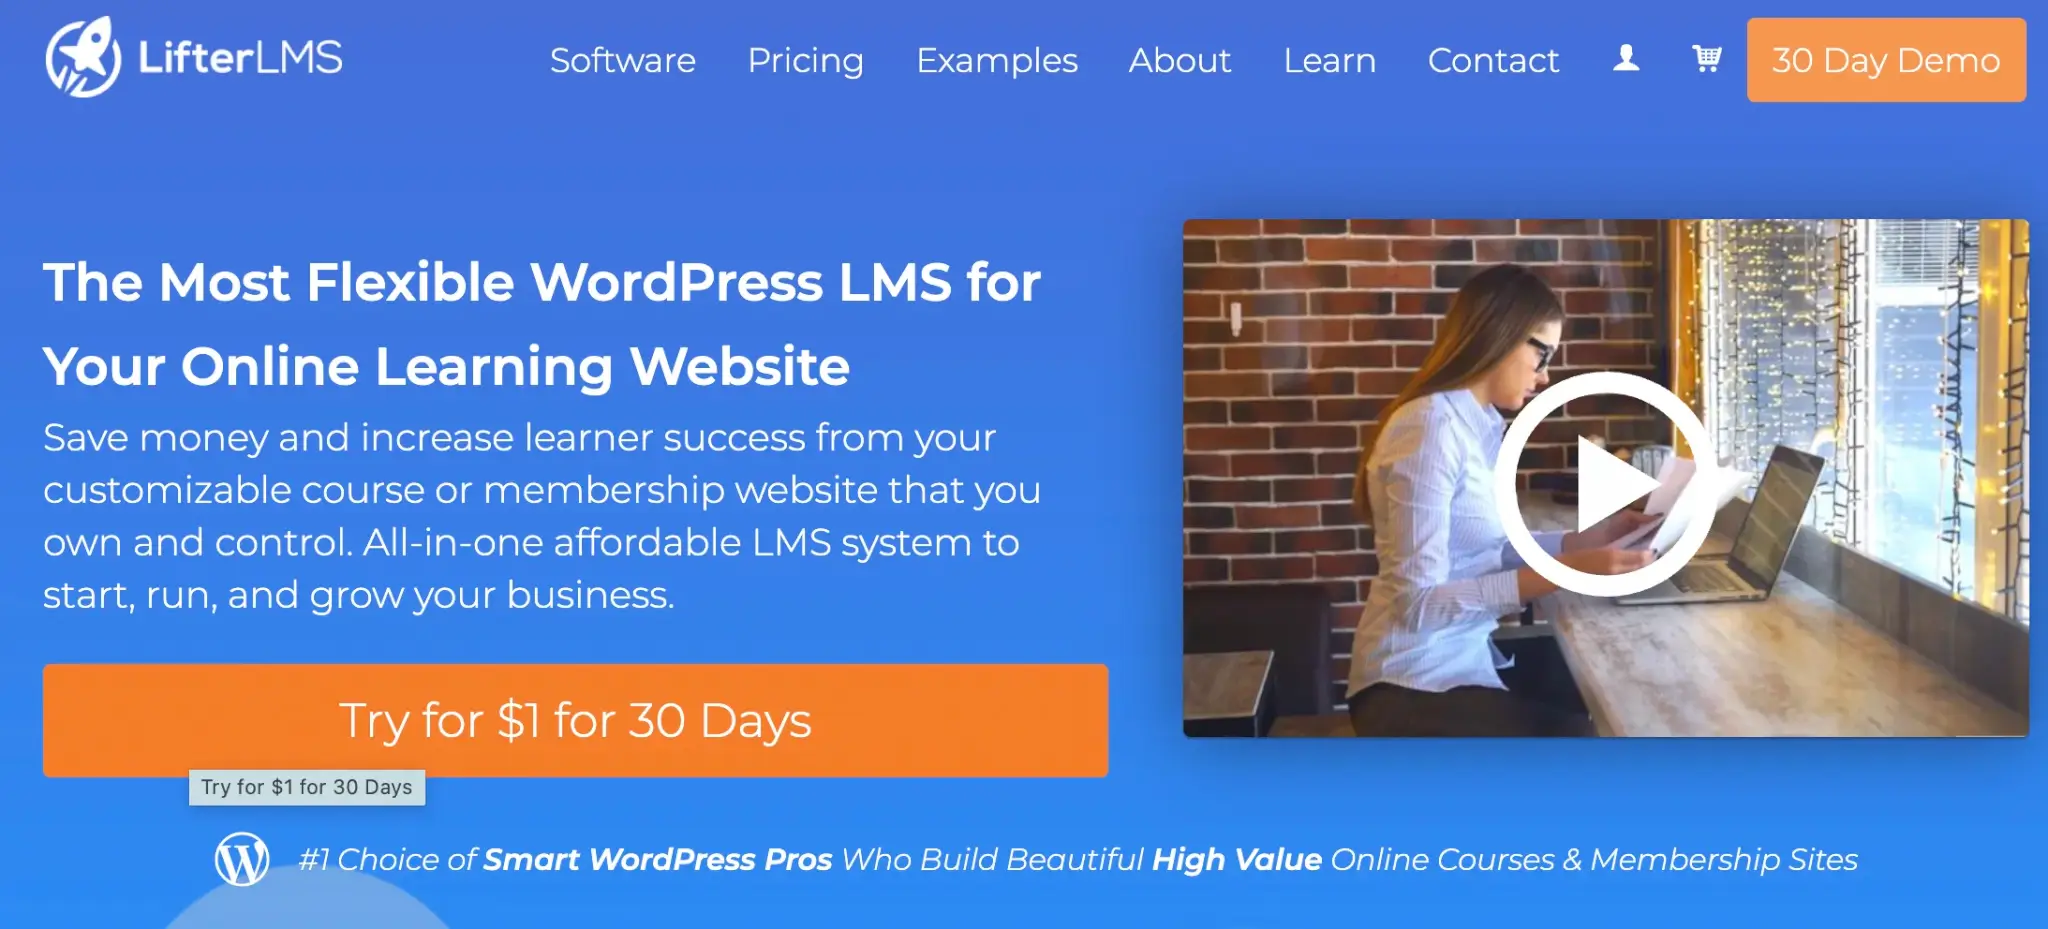 A screenshot of LifterLMS' website showing a title about flexible wordpress LMs.